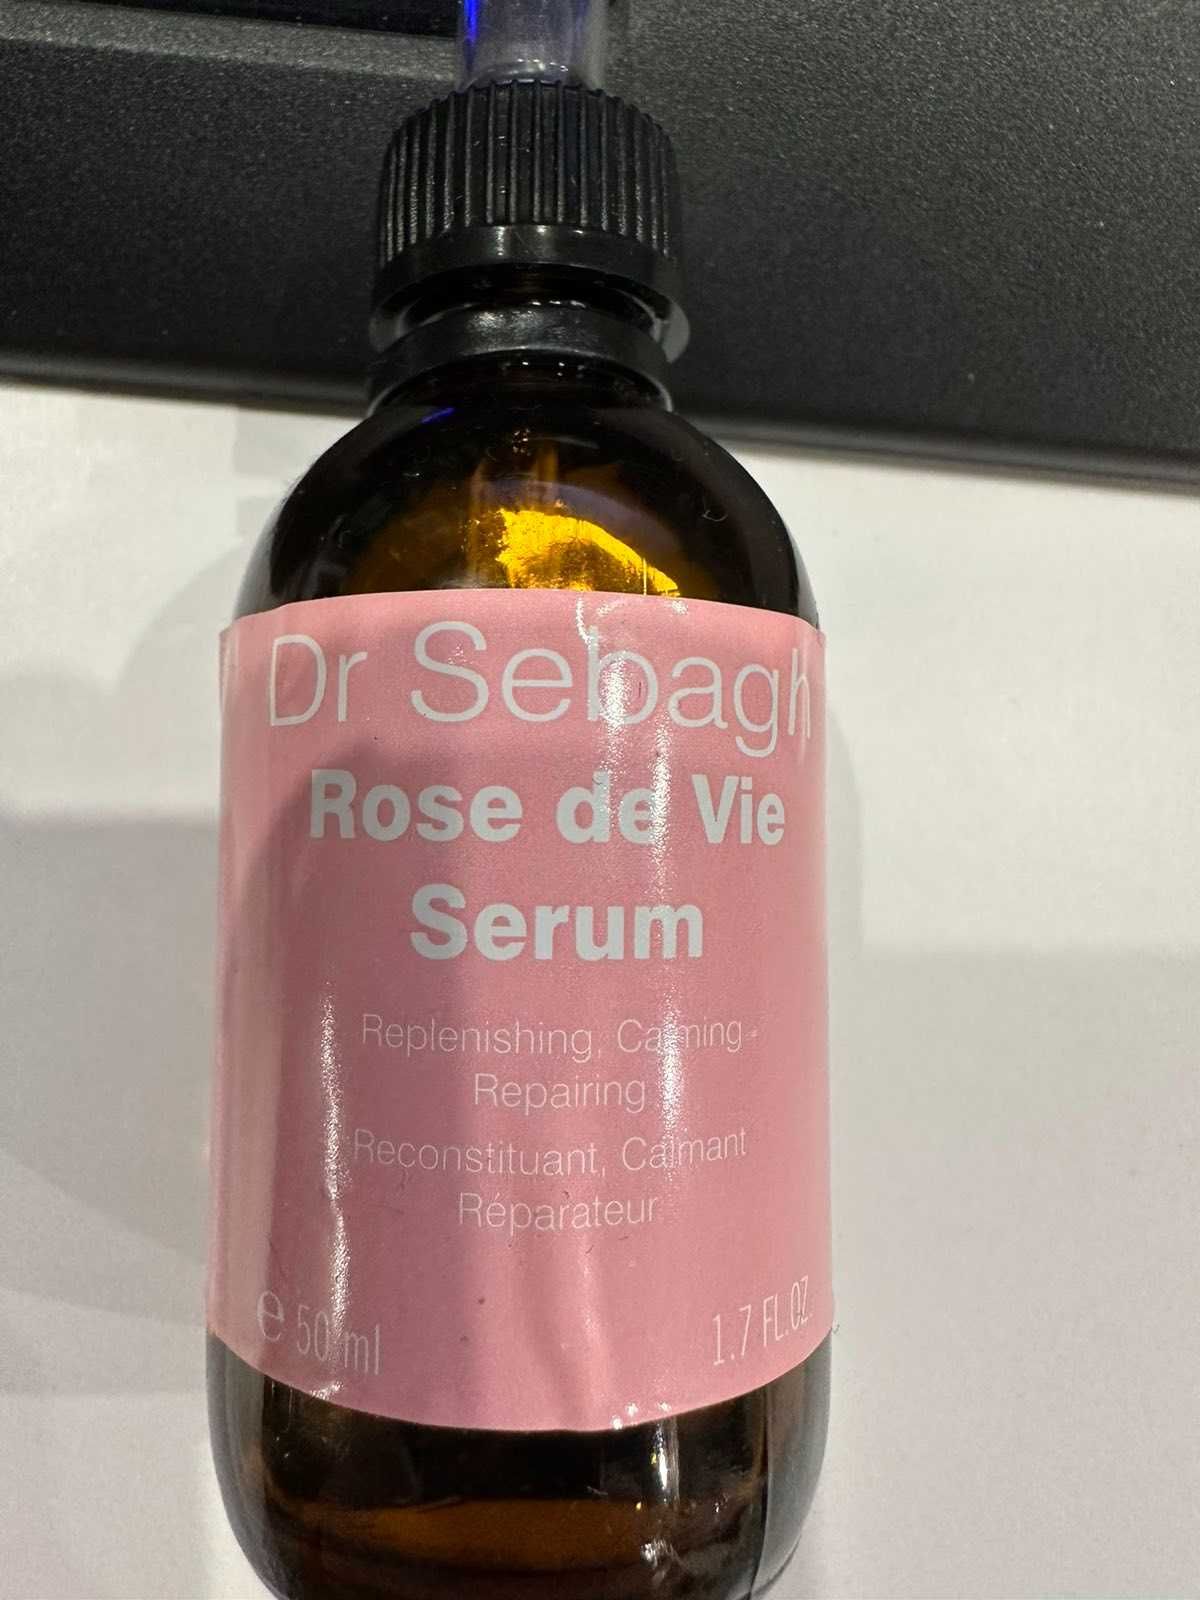 Сыворотка Dr Sebagh Rose de vie serum / Франция/